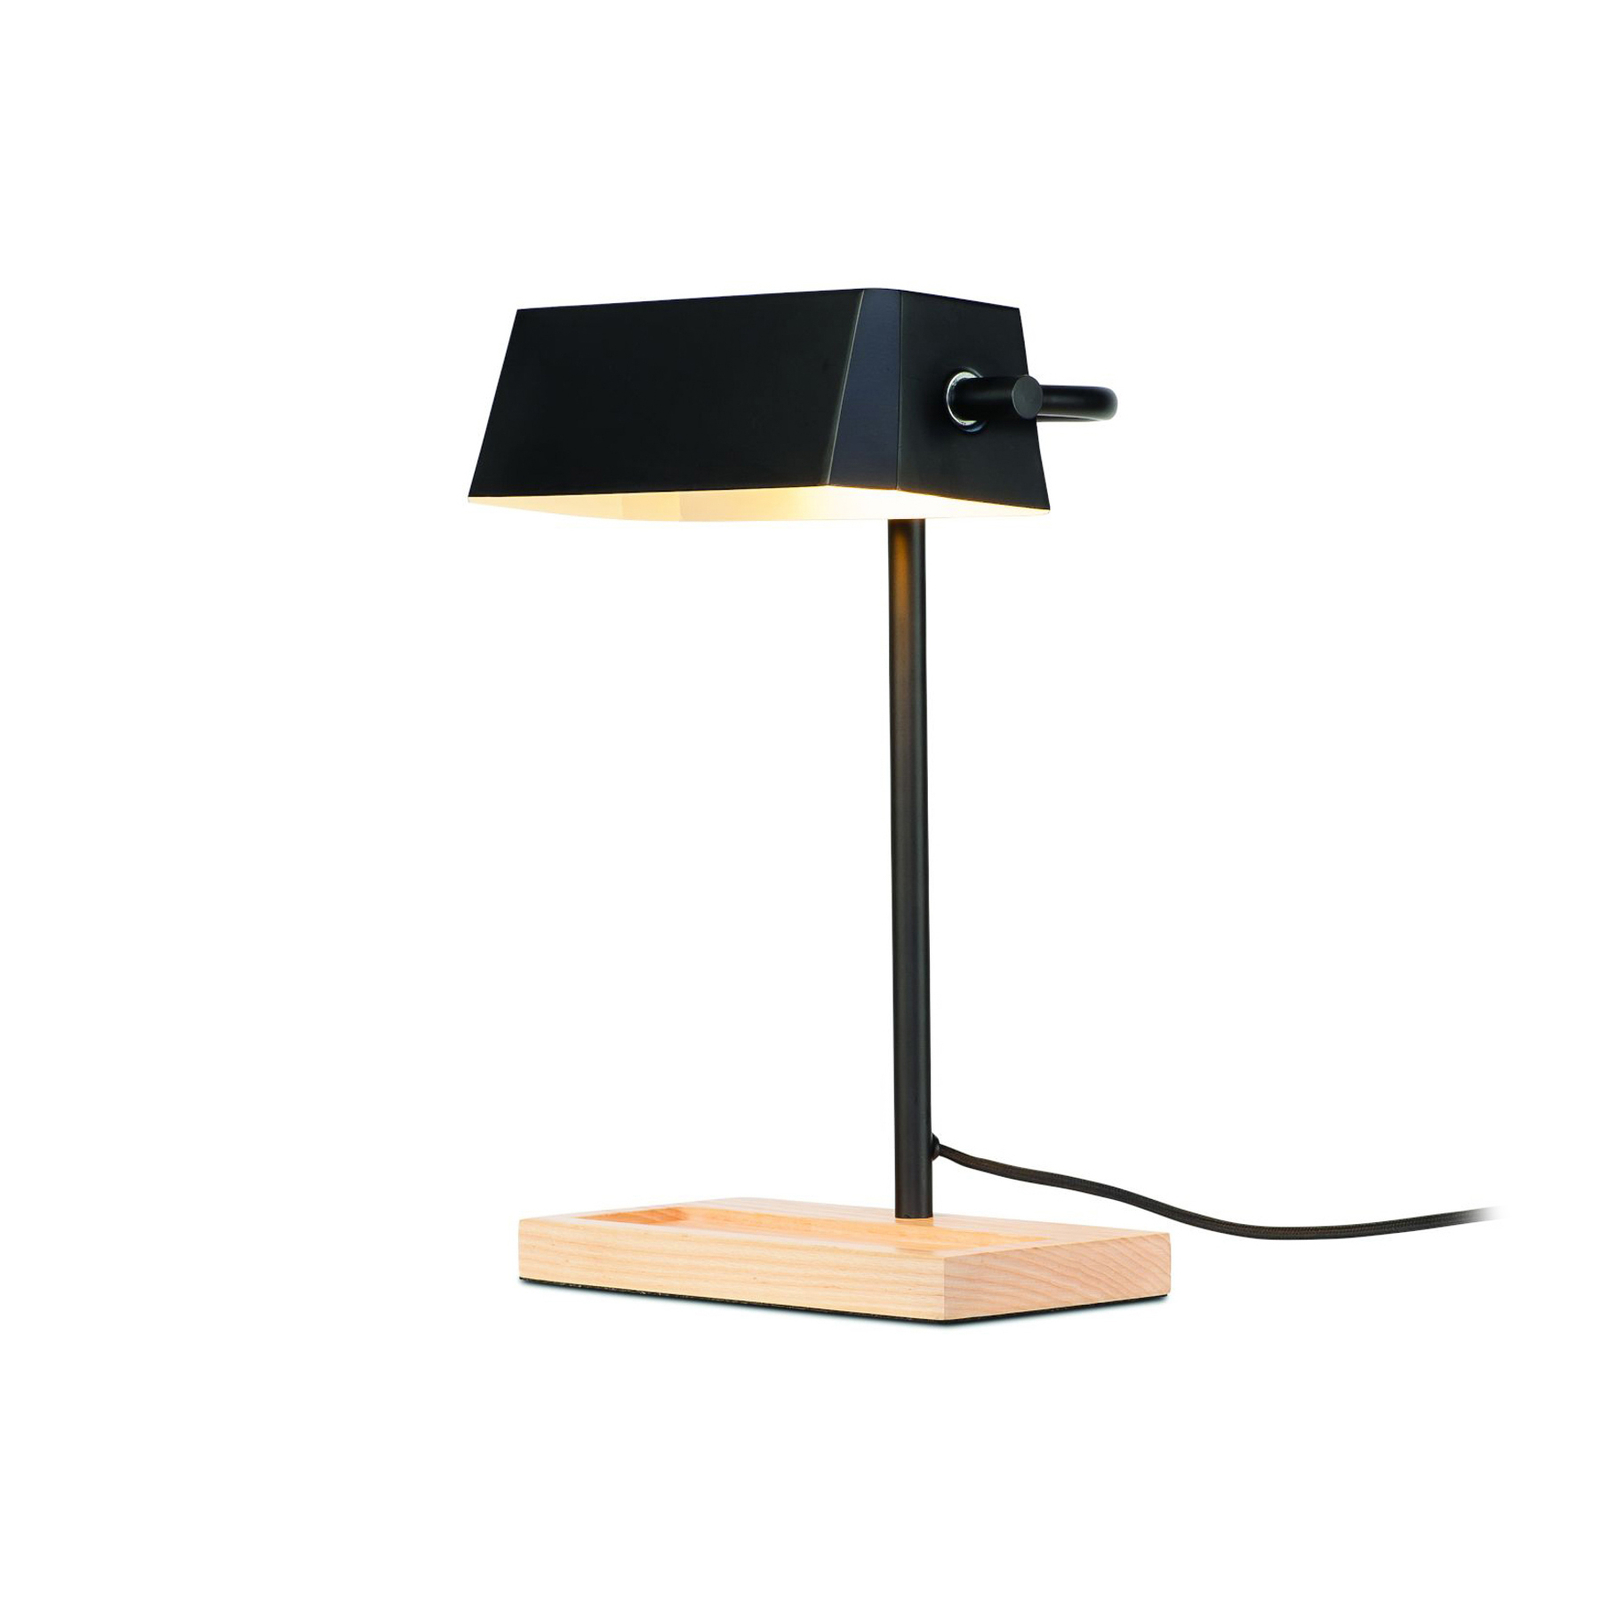 It’s about RoMi Cambridge table lamp, black